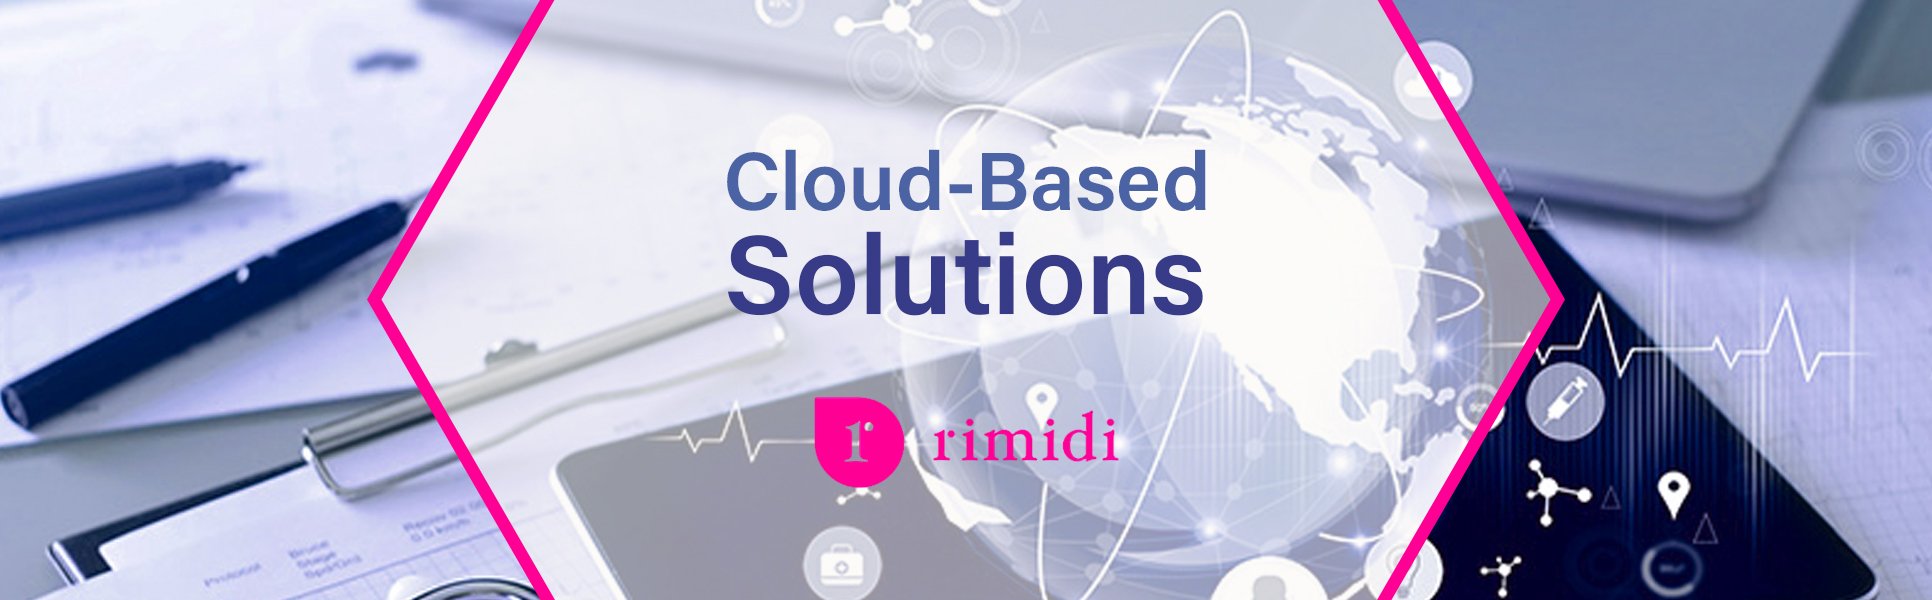 Rimidi Cloud-Based Solutions | DOHC